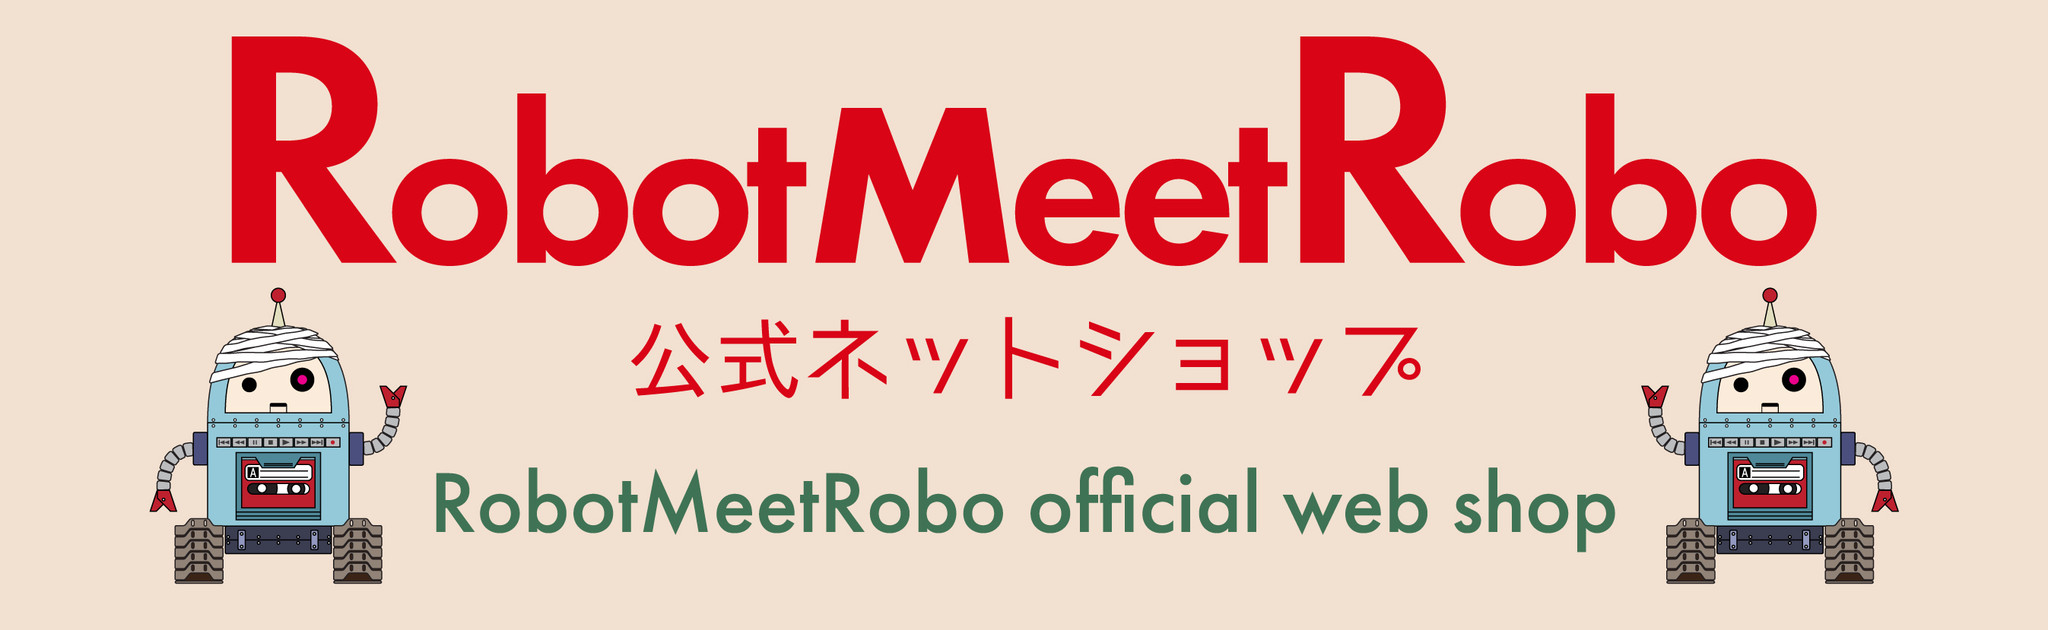 RobotMeetRobo公式ネットショップ